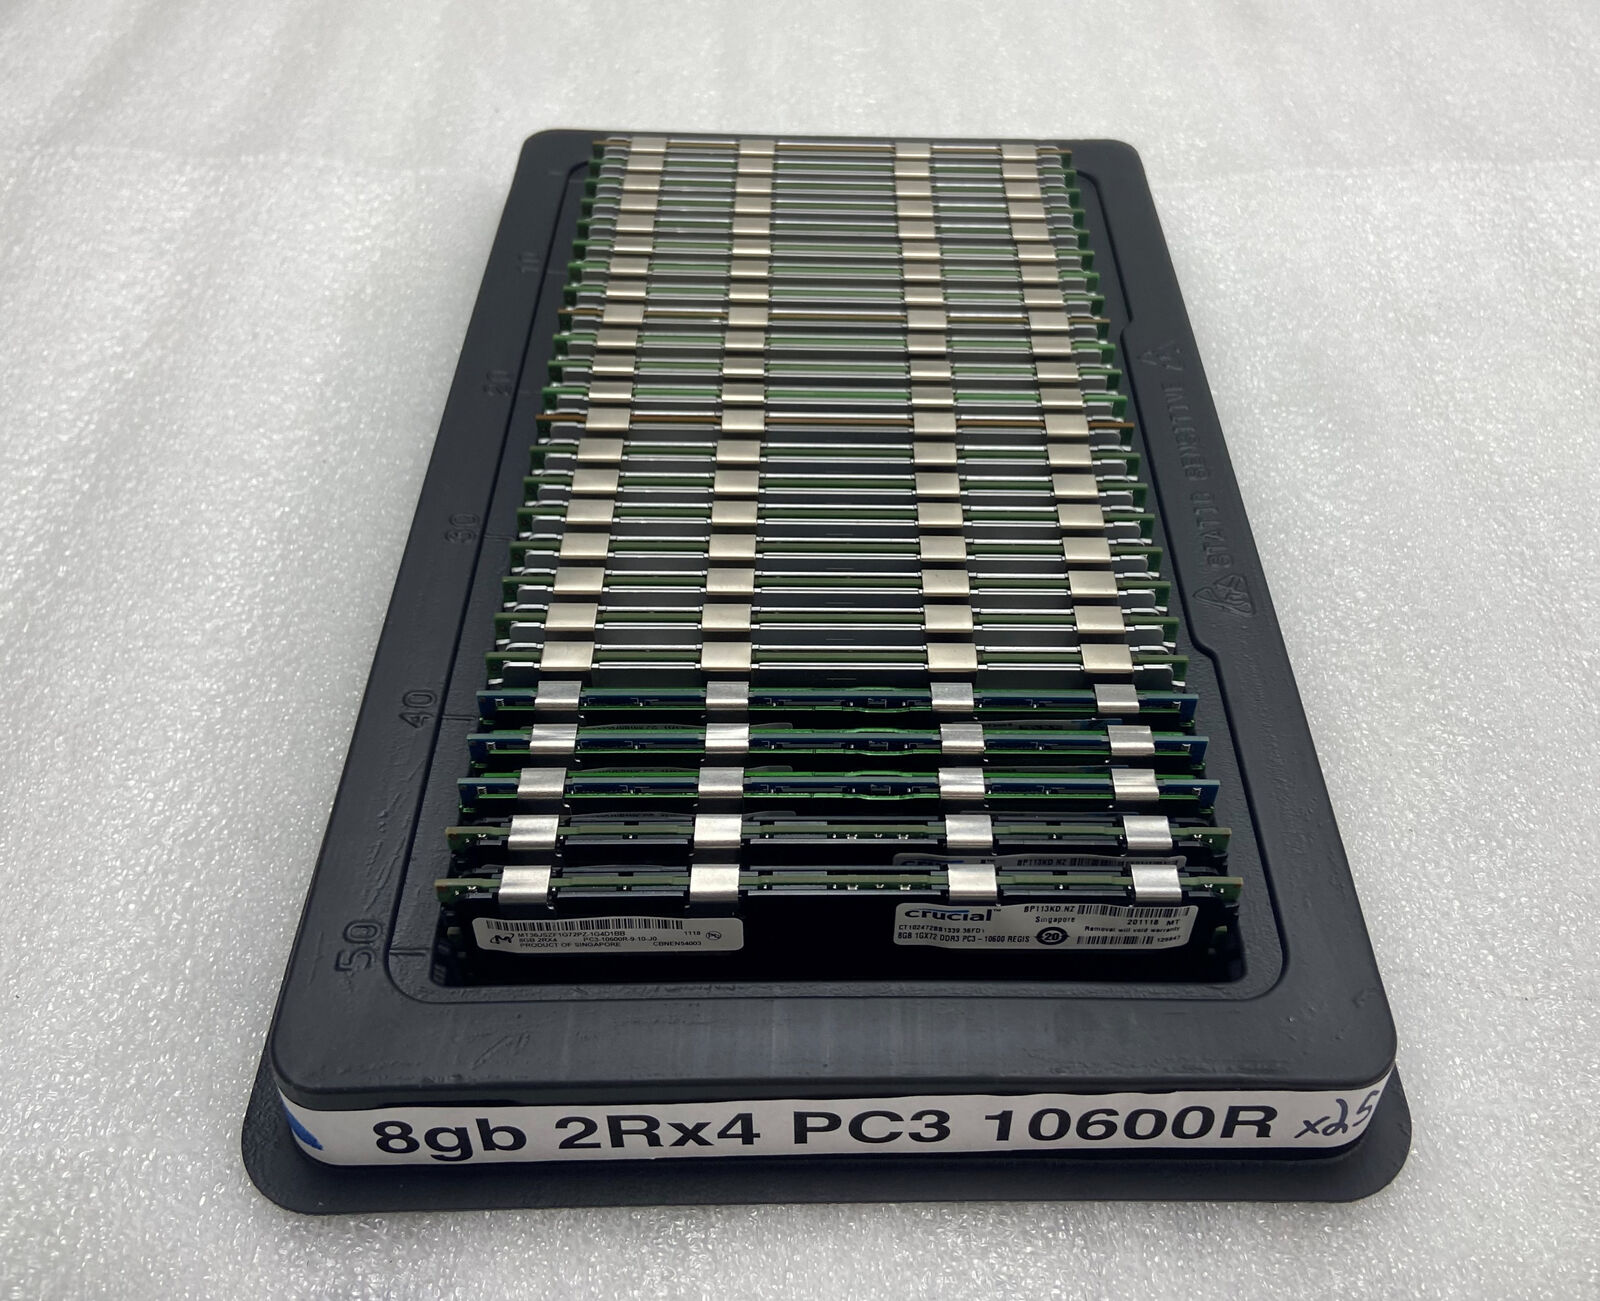 Lot of 25 RAM DIMM Server Memory W HEATGUARDS 8GB 2Rx4 PC3-10600R Registered ECC